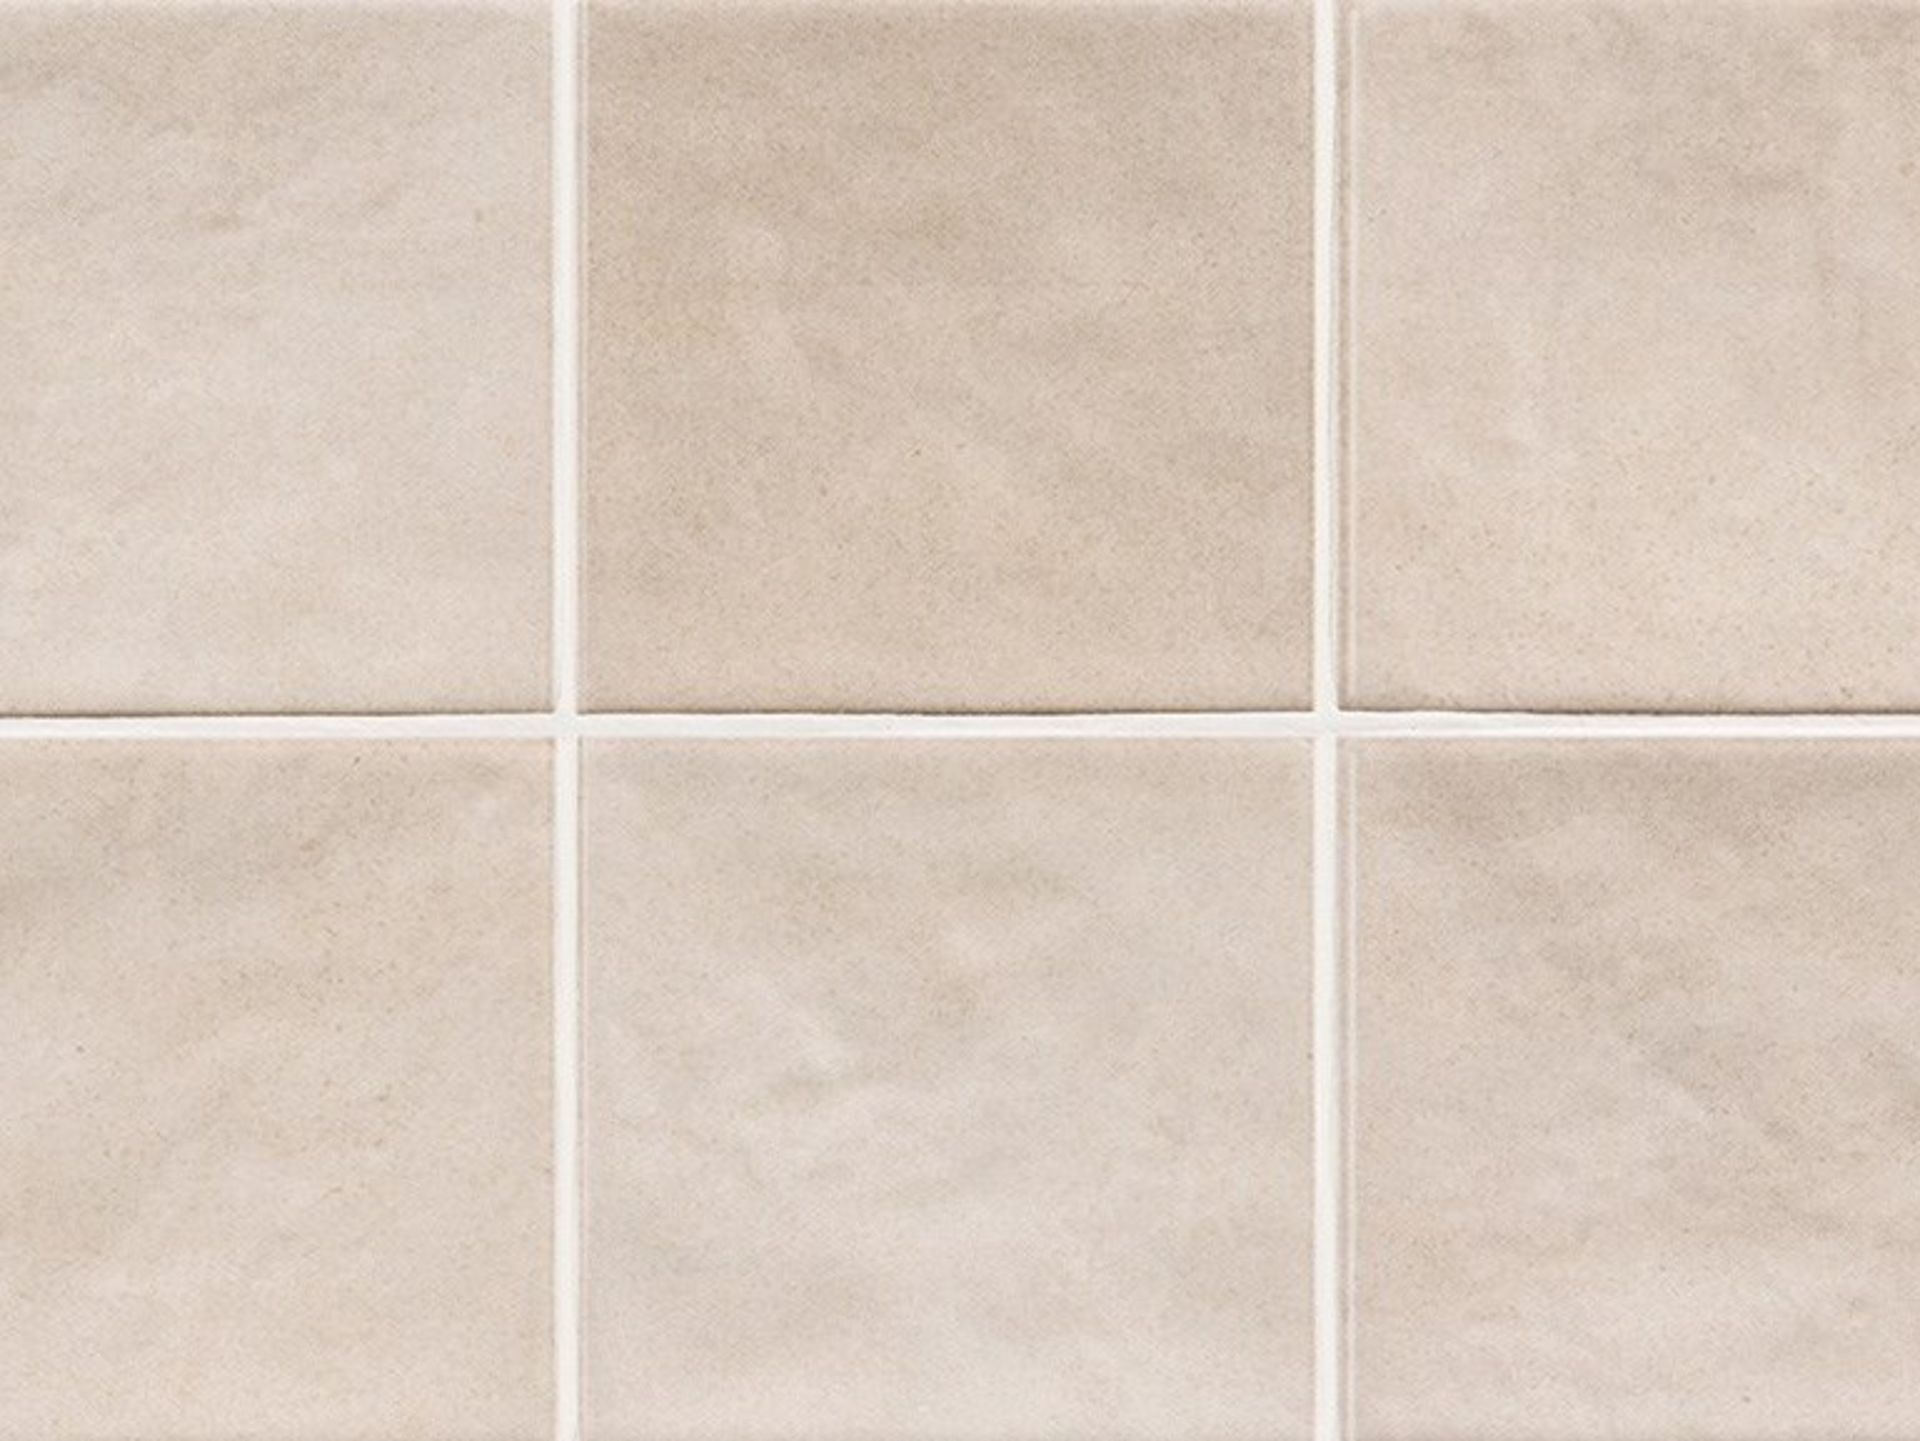 NEW 7.98m2 Procelanosa Ronda Sand Feature Tiles.20x31.6cm per tile.1.14m2 per pack.Beyond its well-